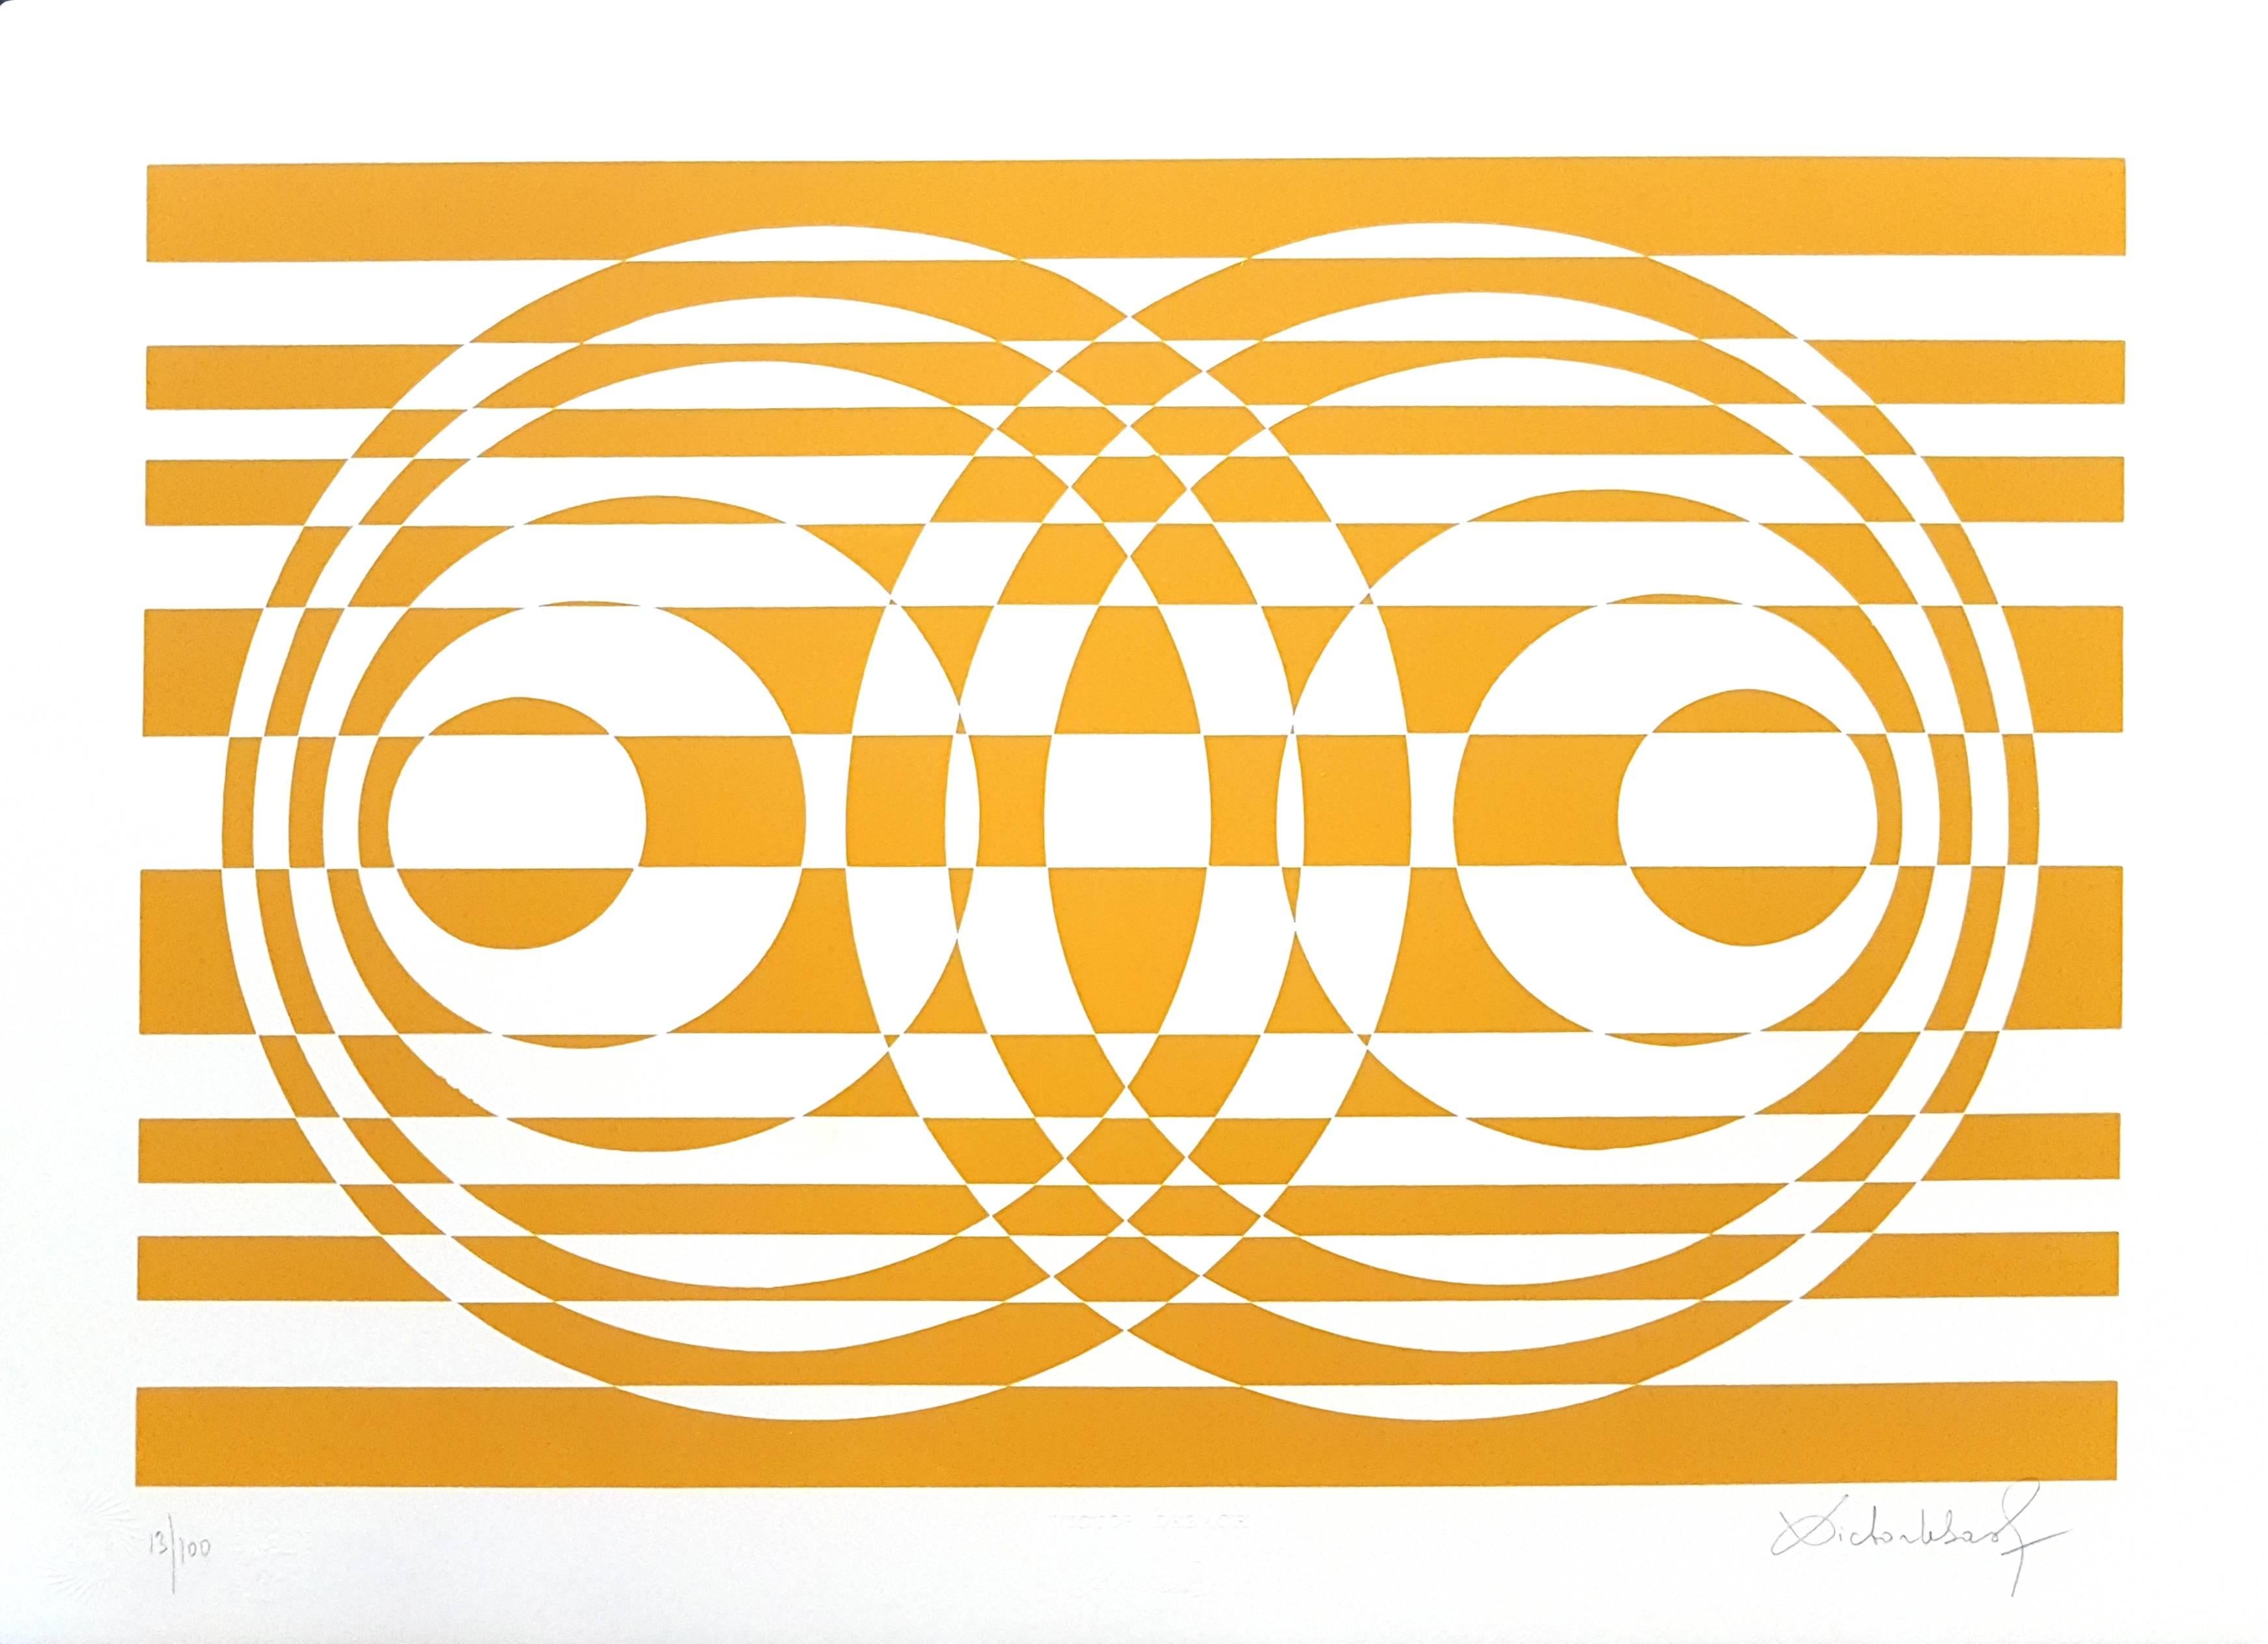 Victor Debach Abstract Print - Two Yellows and Orange Compositions - Original ScreenPrints by V. Debach - 1970s